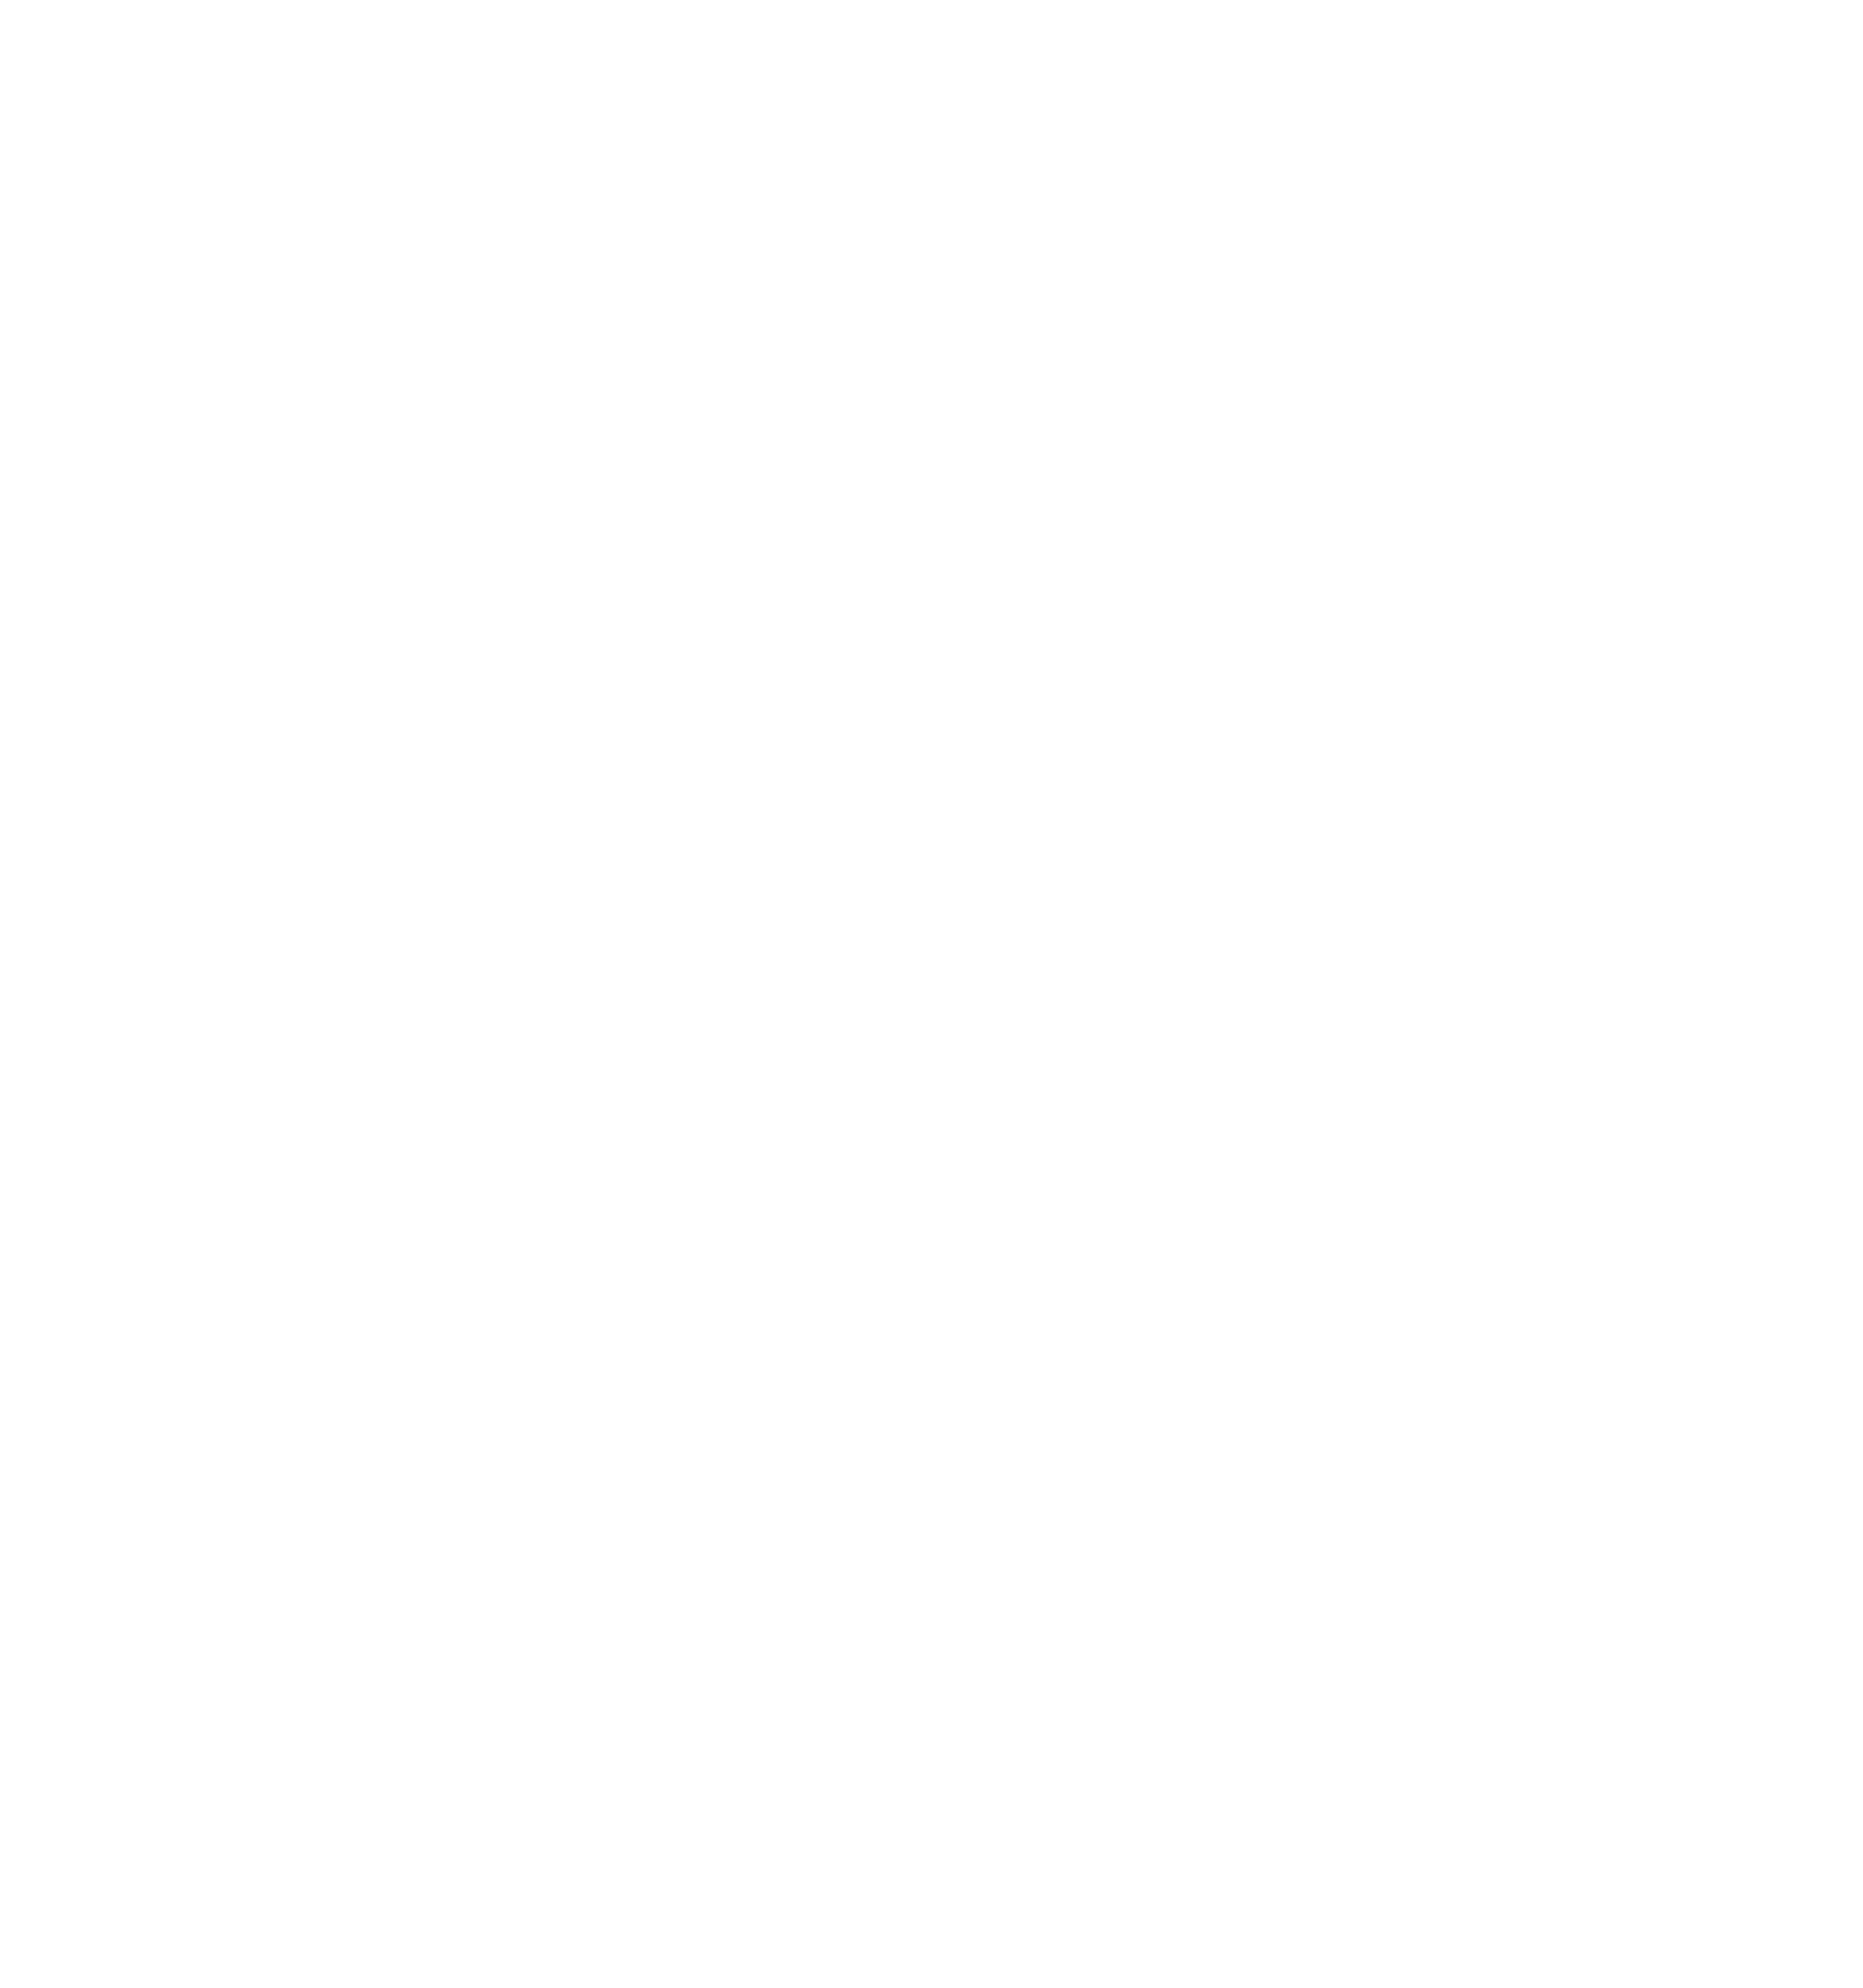 Blind Bend Studio Logo